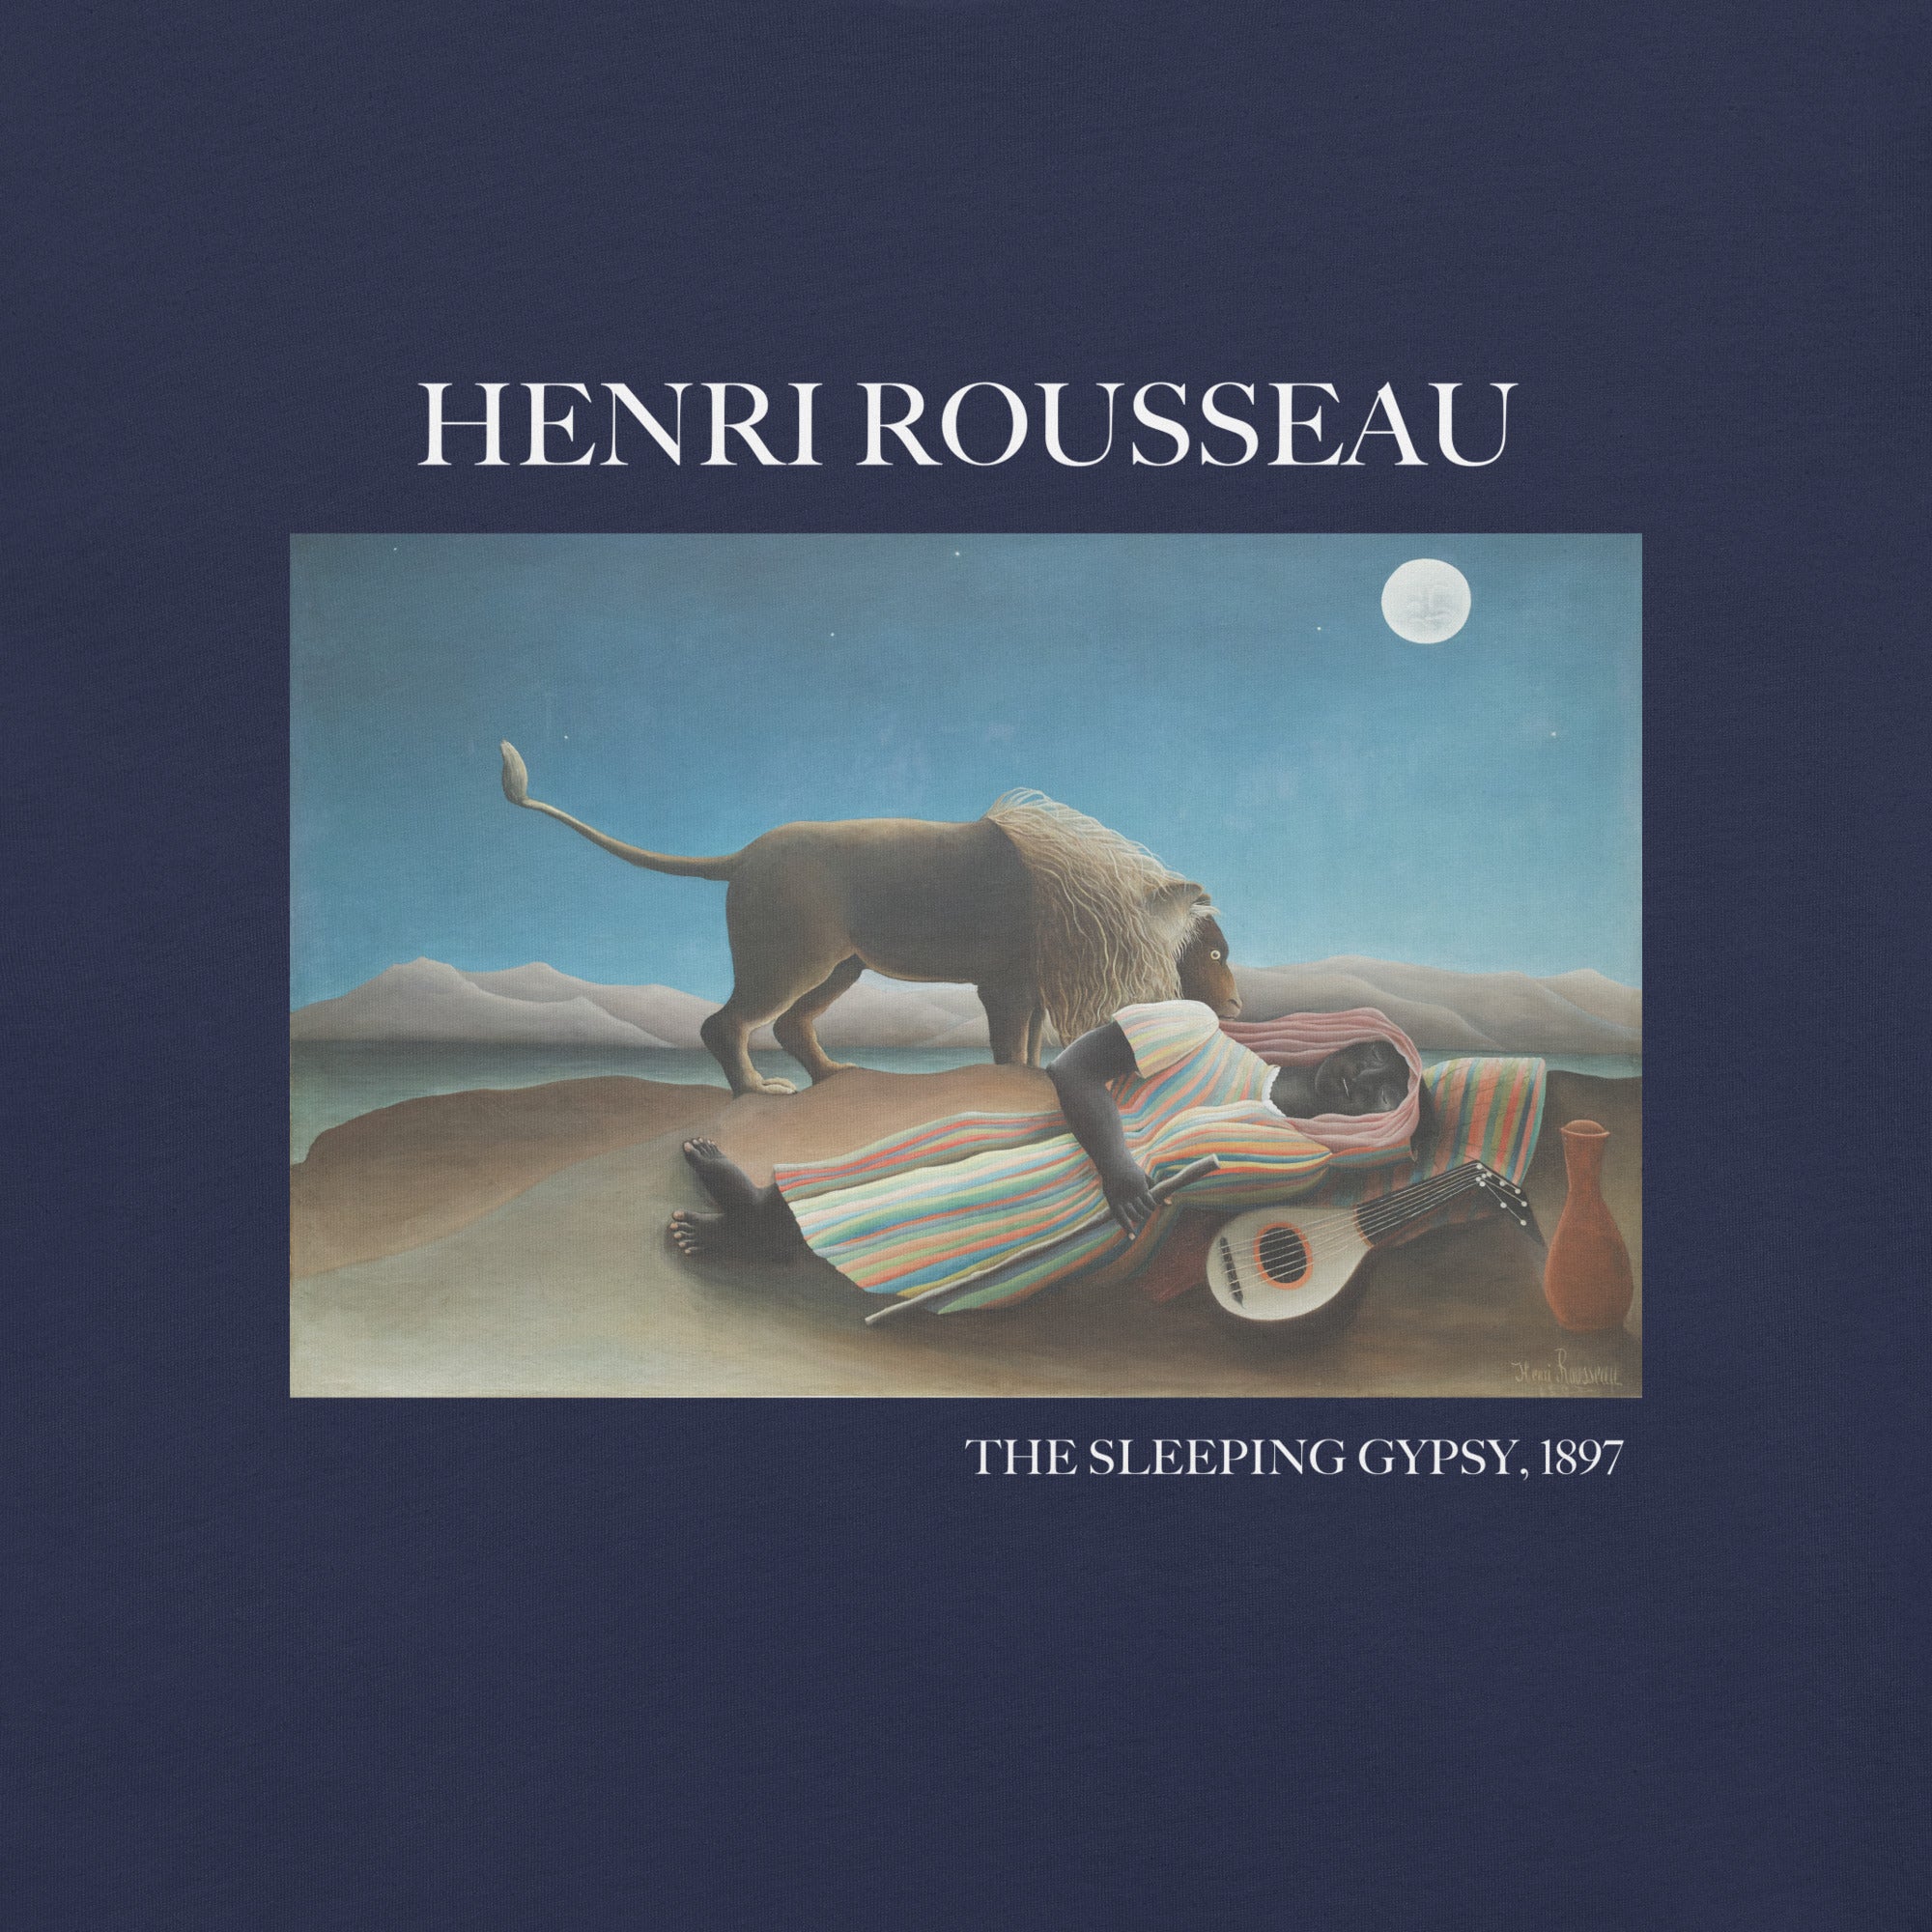 Henri Rousseau 'The Sleeping Gypsy' Famous Painting T-Shirt | Unisex Classic Art Tee